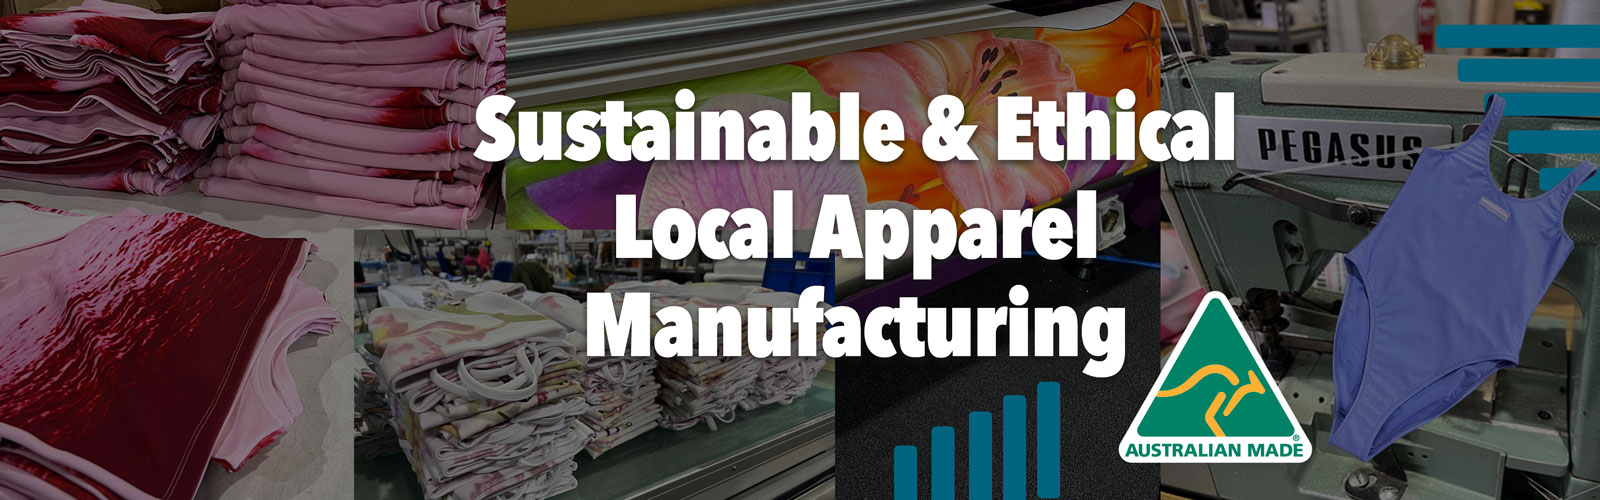 Local Apparel Manufacturing @ Image Digital